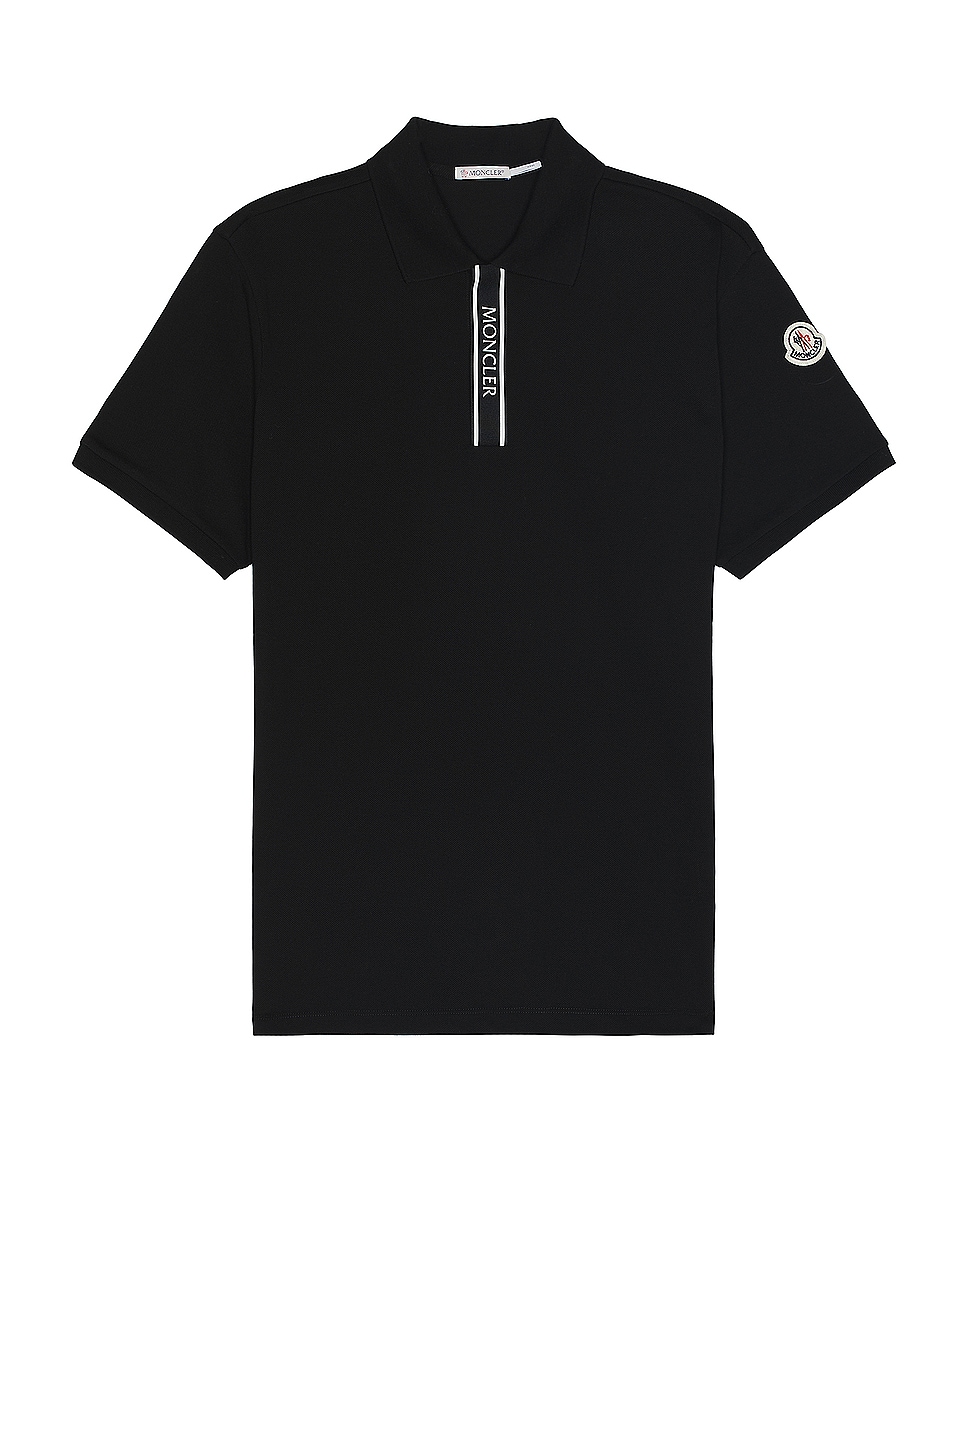 Moncler Short Sleeve Polo in Black